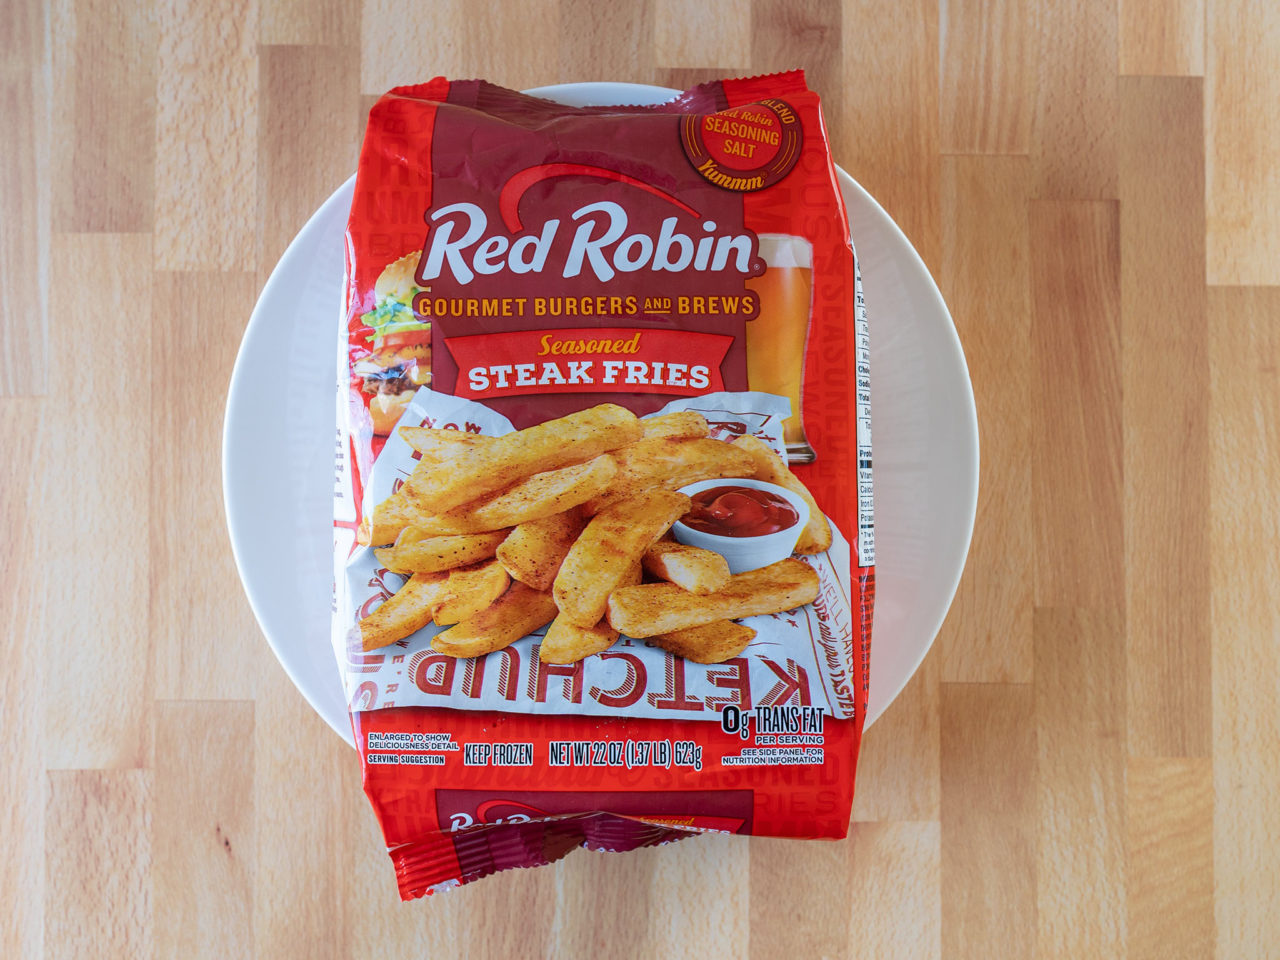 How to cook Red Robin Seasoned Steak Fries in an air fryer – Air Fry Guide